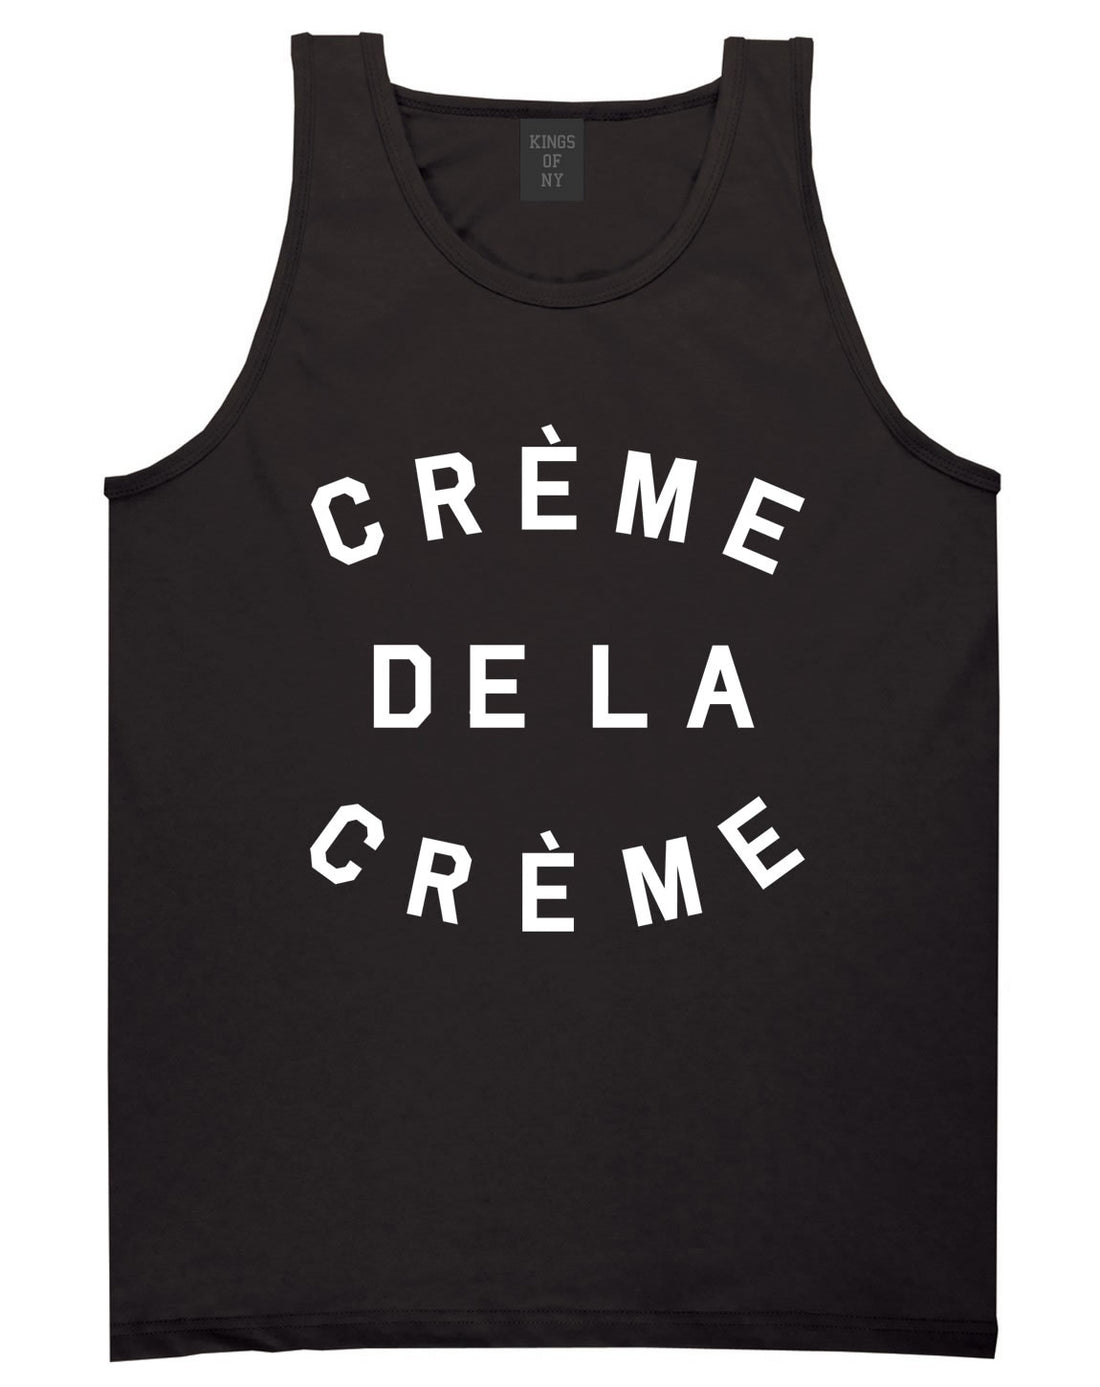 Creme De La Creme Celebrity Fashion Crop Tank Top In Black by Kings Of NY